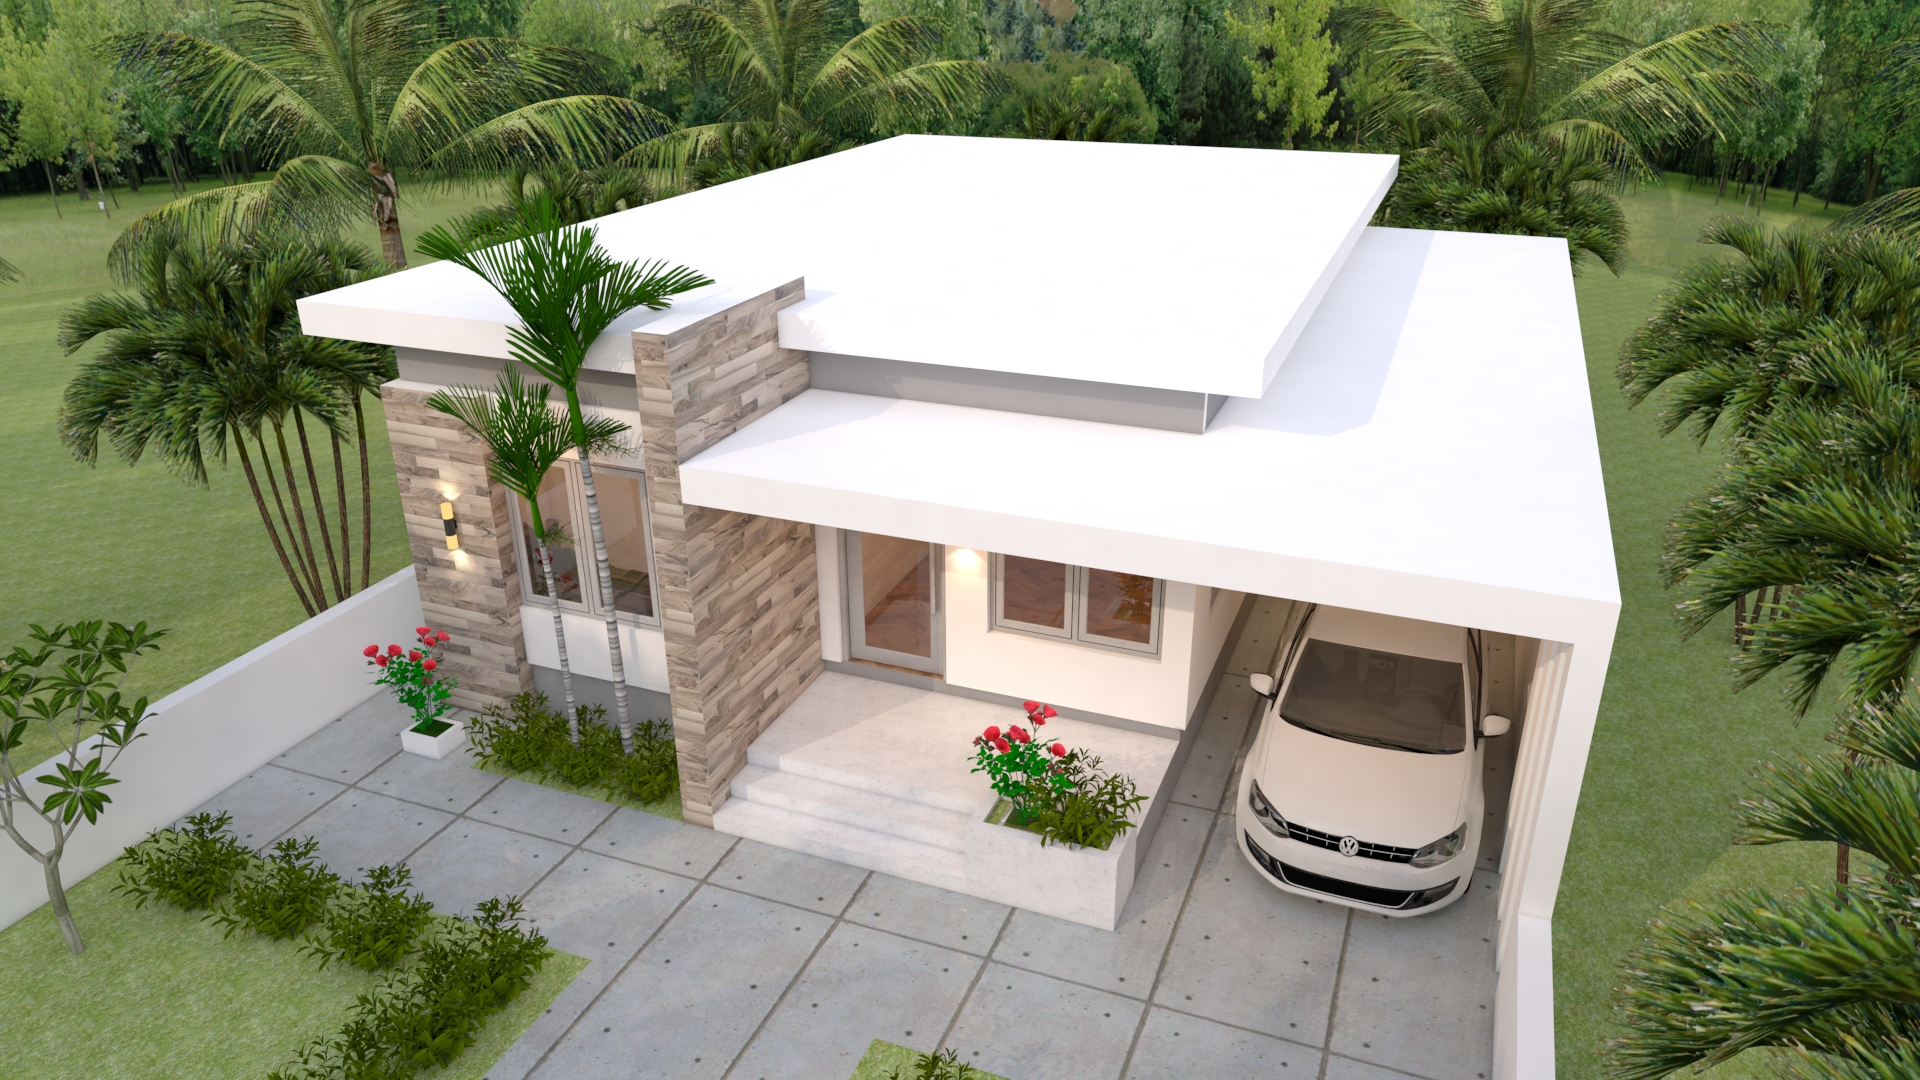 House Layout Design 10x13 Meter 33x43 Feet 3 Beds 4